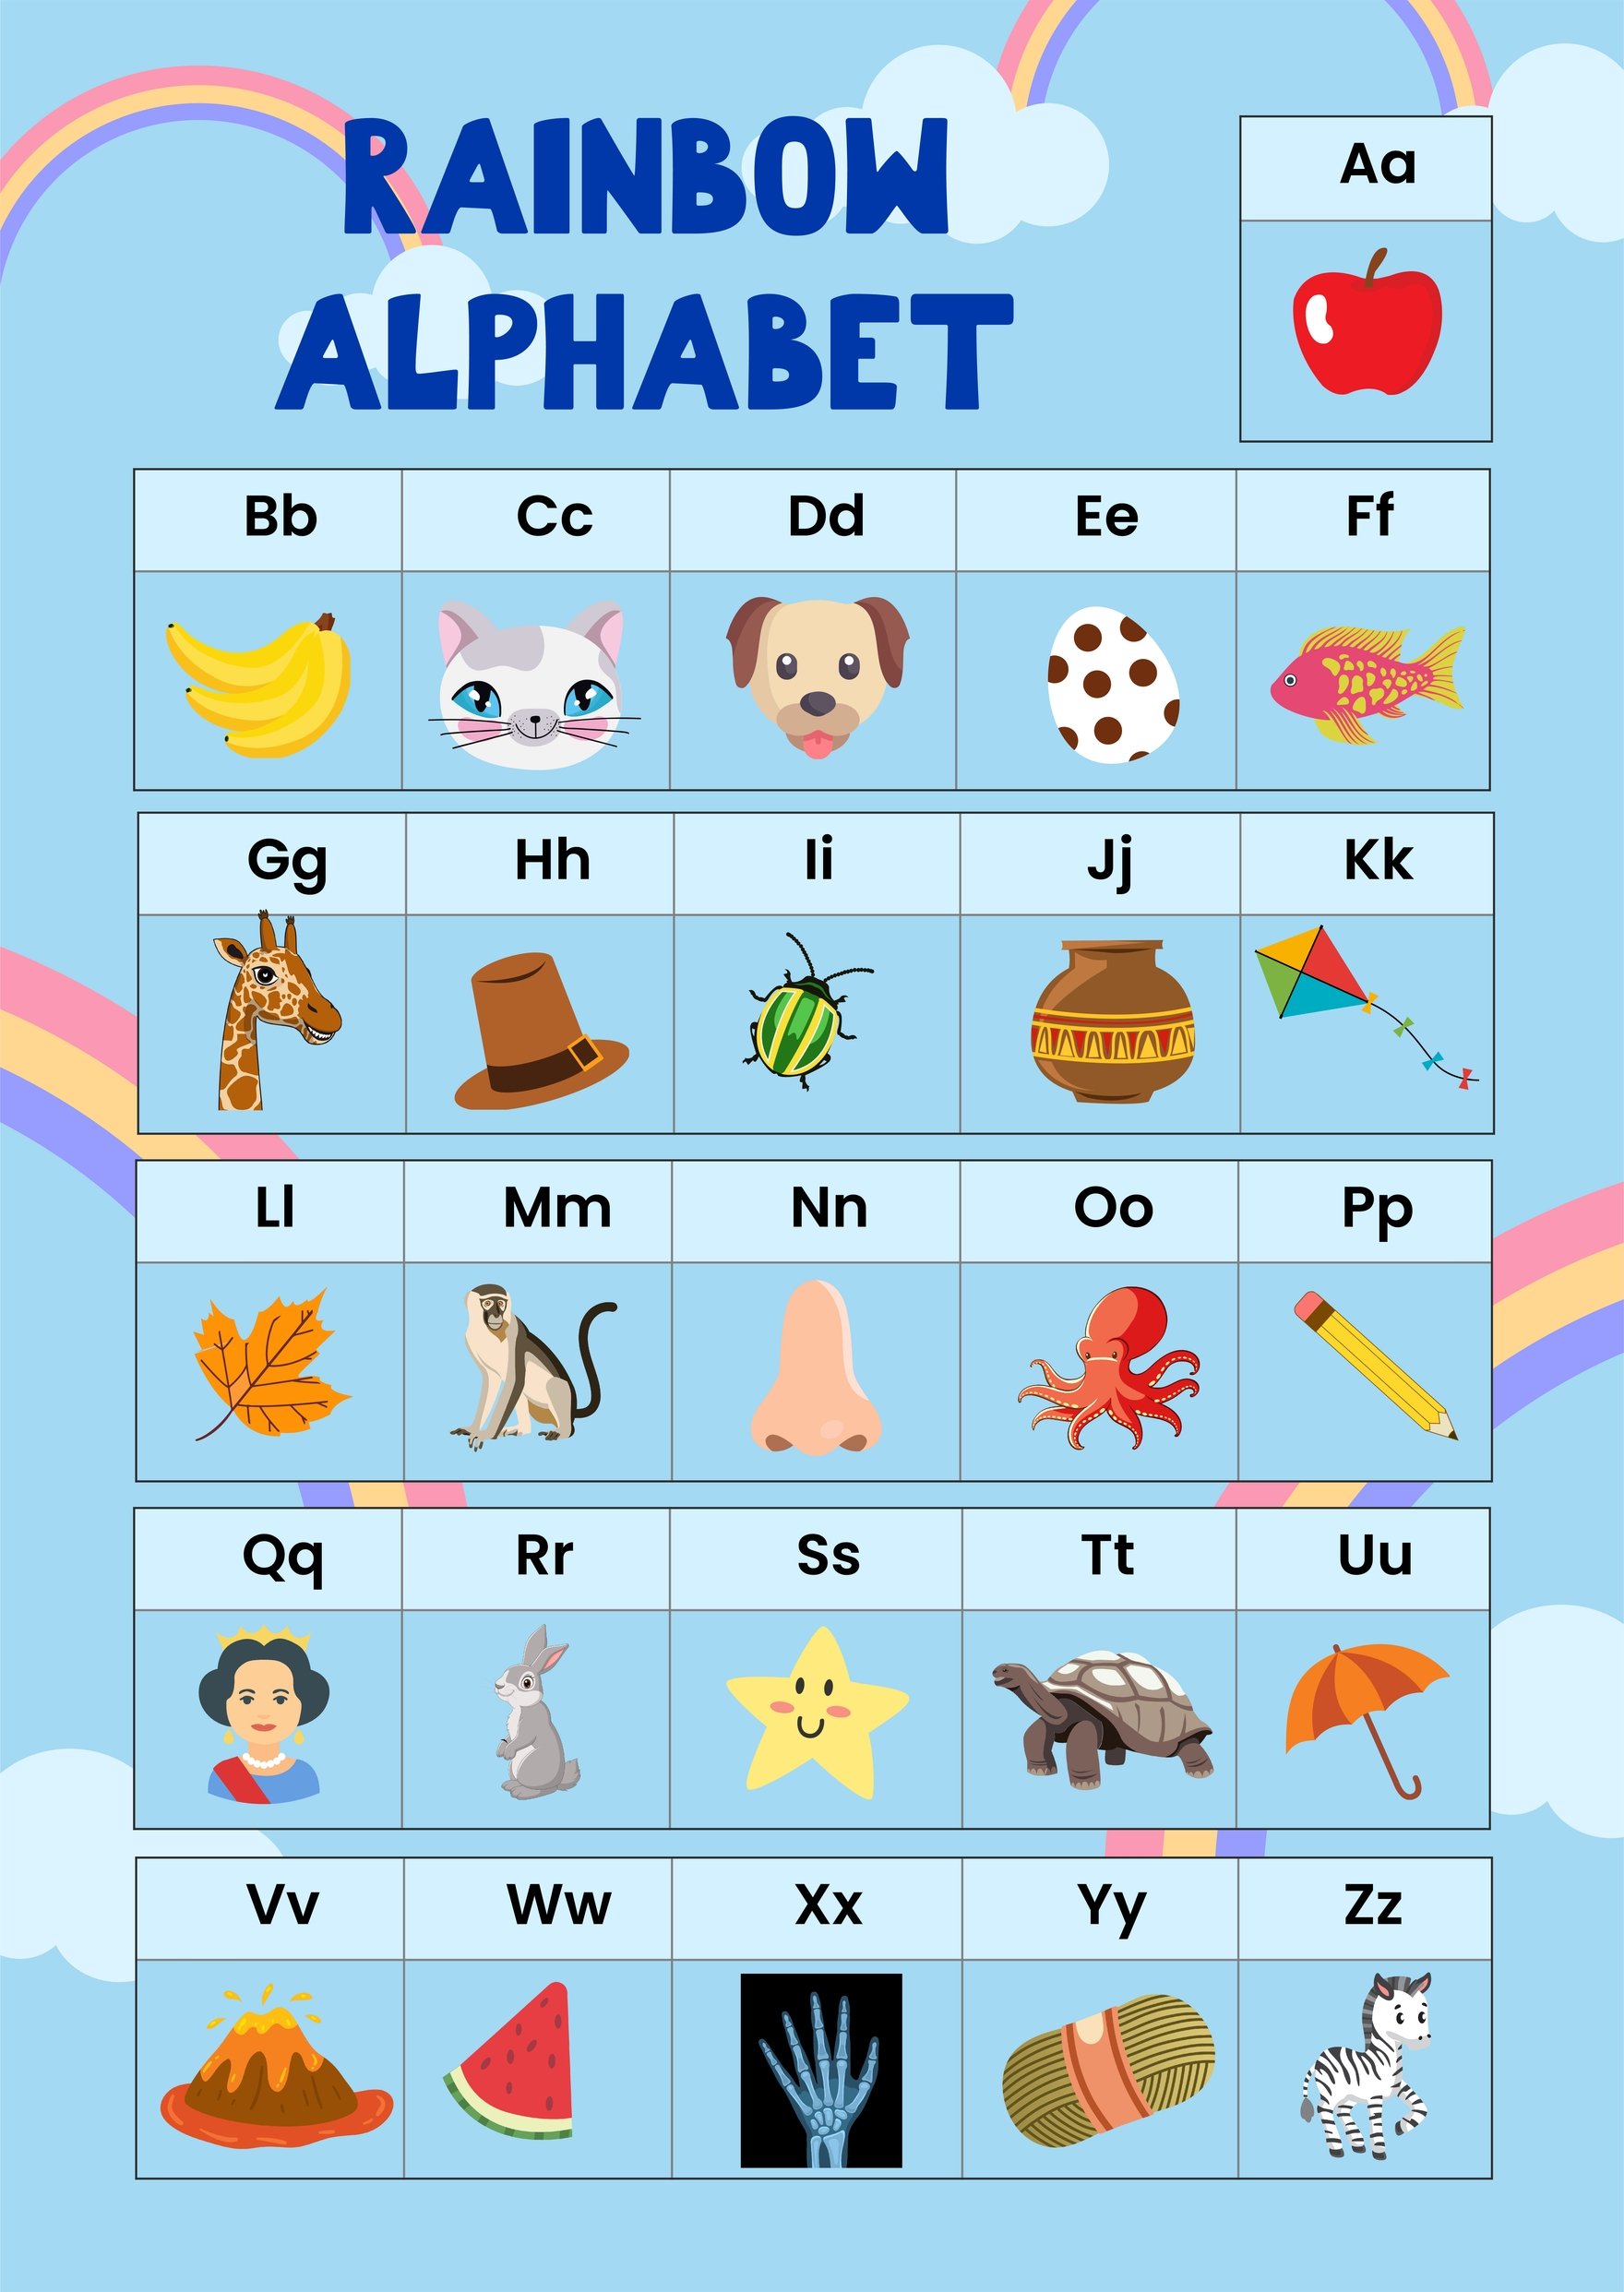 Rainbow Alphabet Chart in PDF, Illustrator